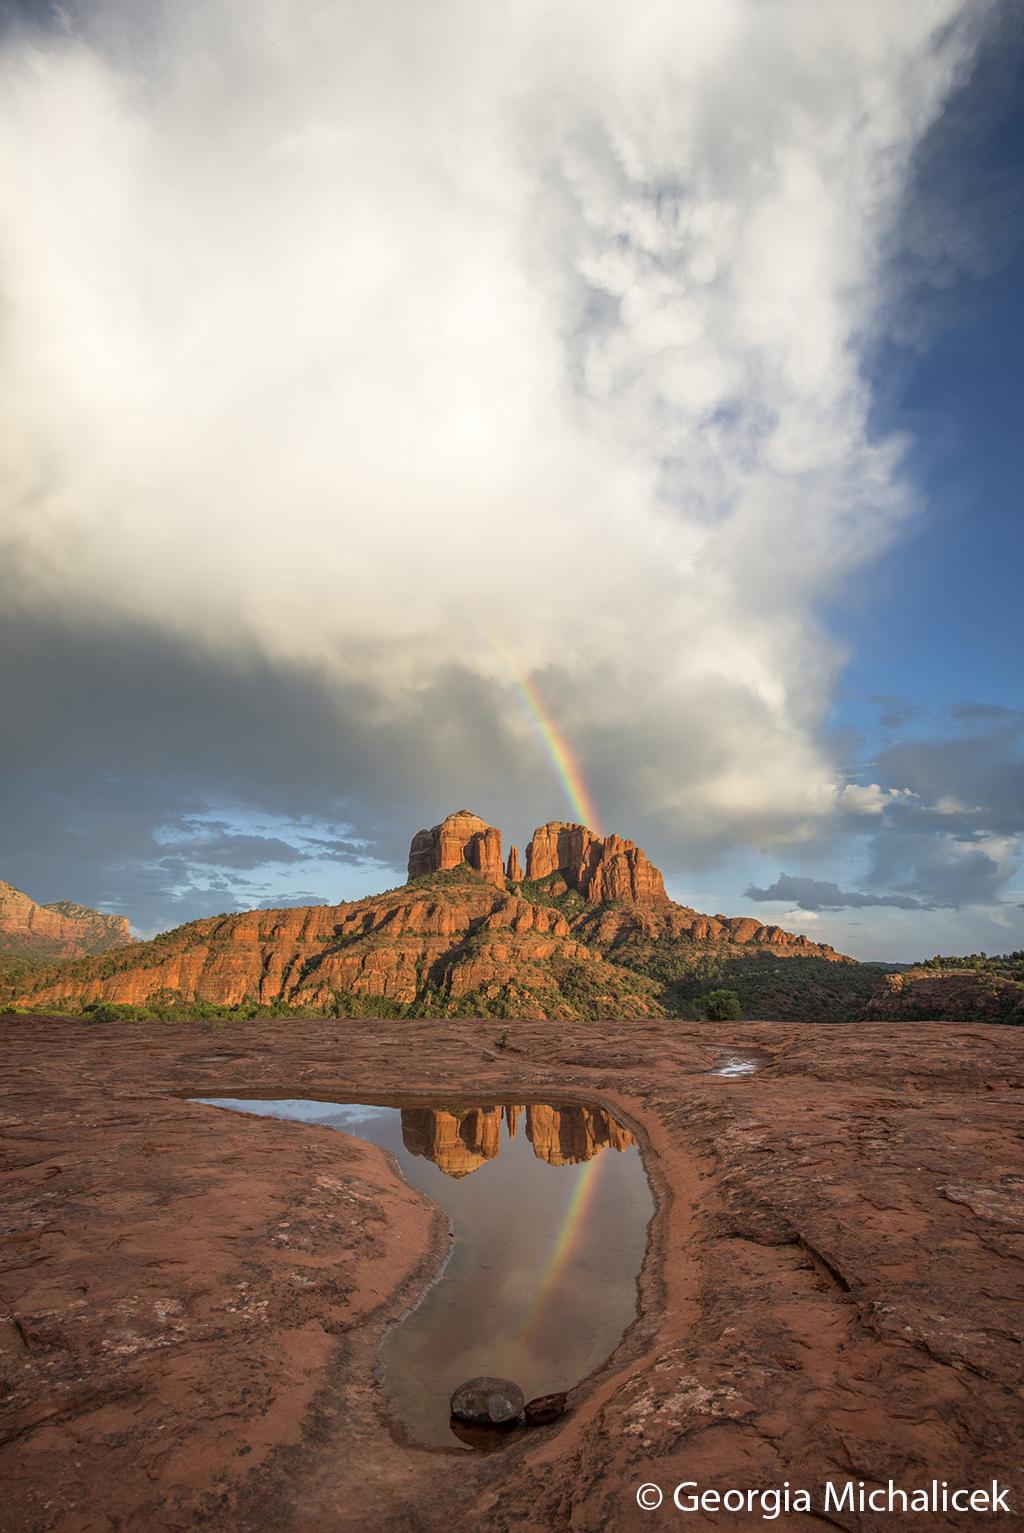 Today’s Photo Of The Day is “Joyful Elements” by Georgia Michalicek. Location: Cathedral Rock, Sedona, Arizona.